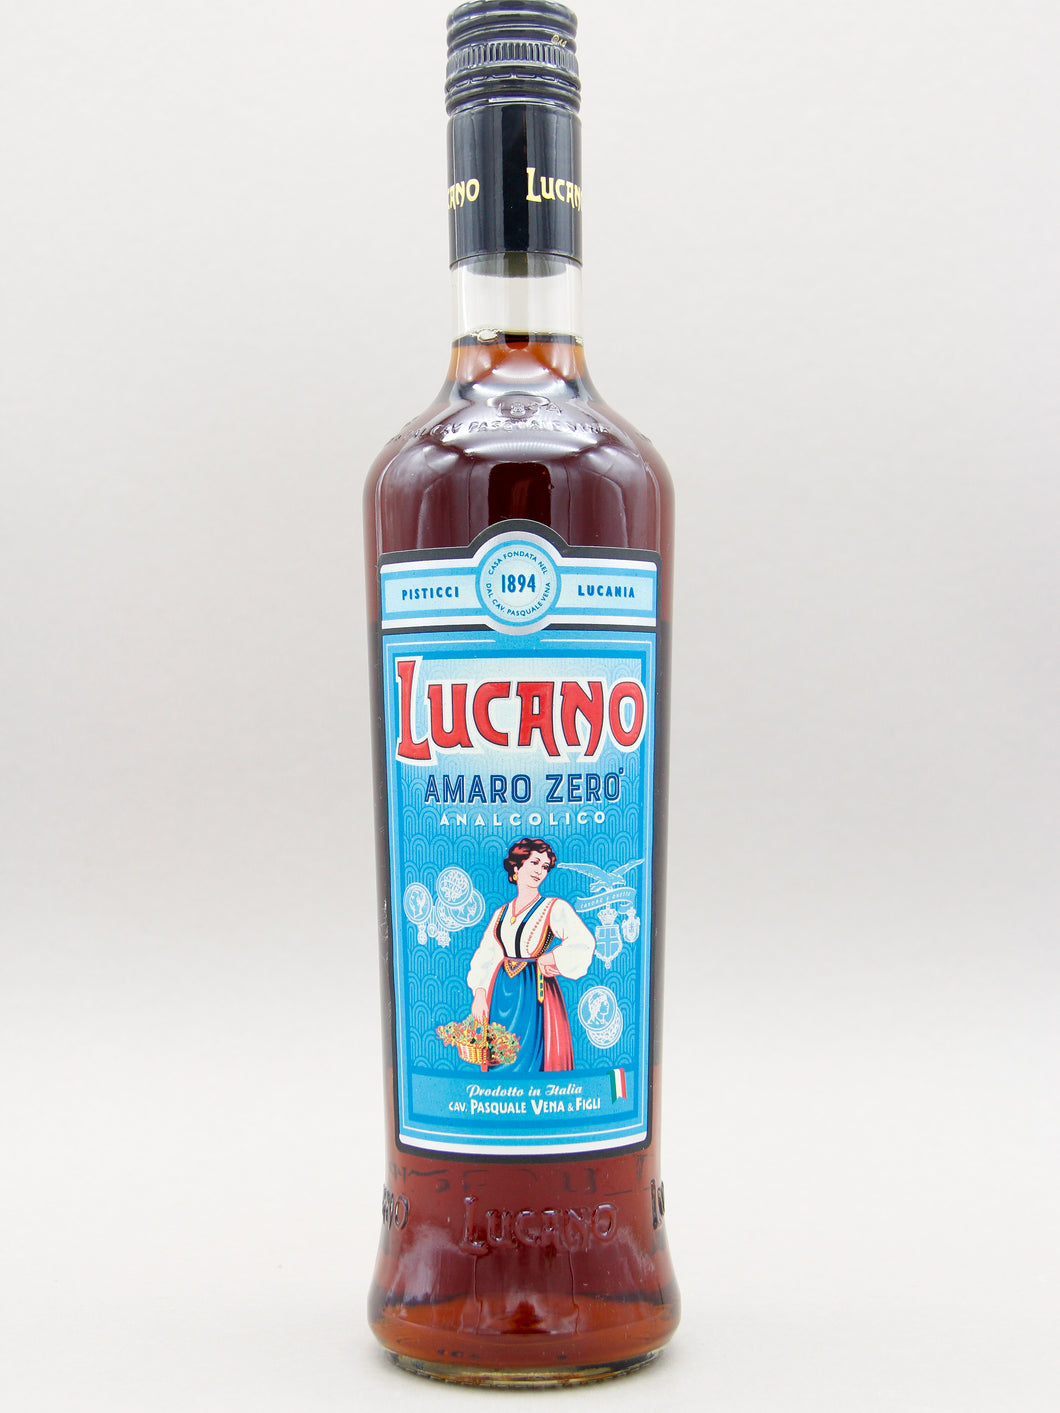 Lucano, Amaro Zero, Analcolico, Italy (0%, 70cl)